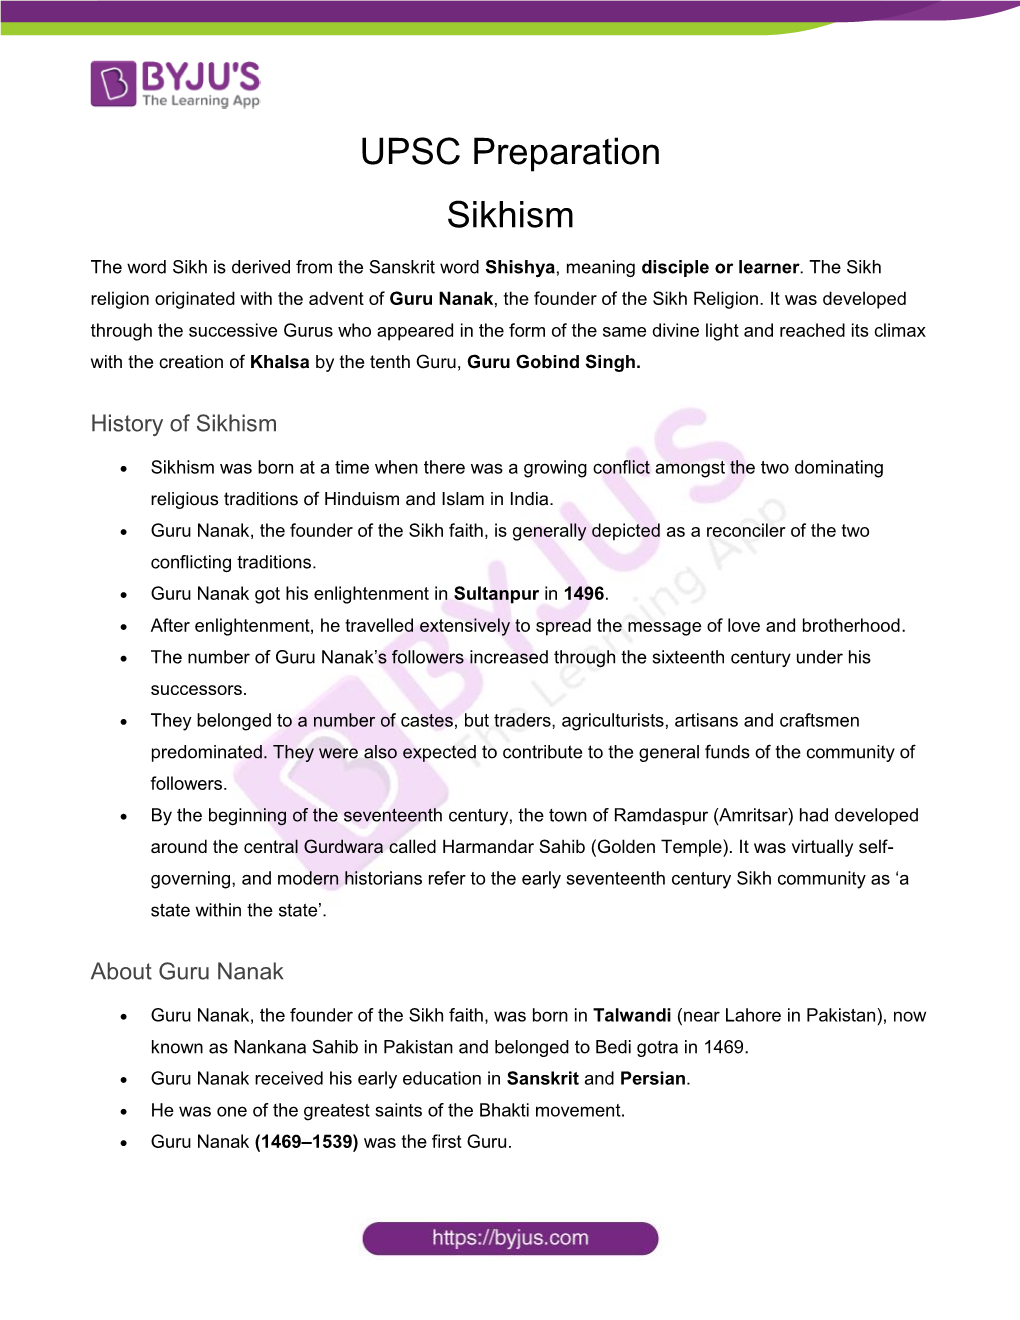 UPSC Preparation Sikhism